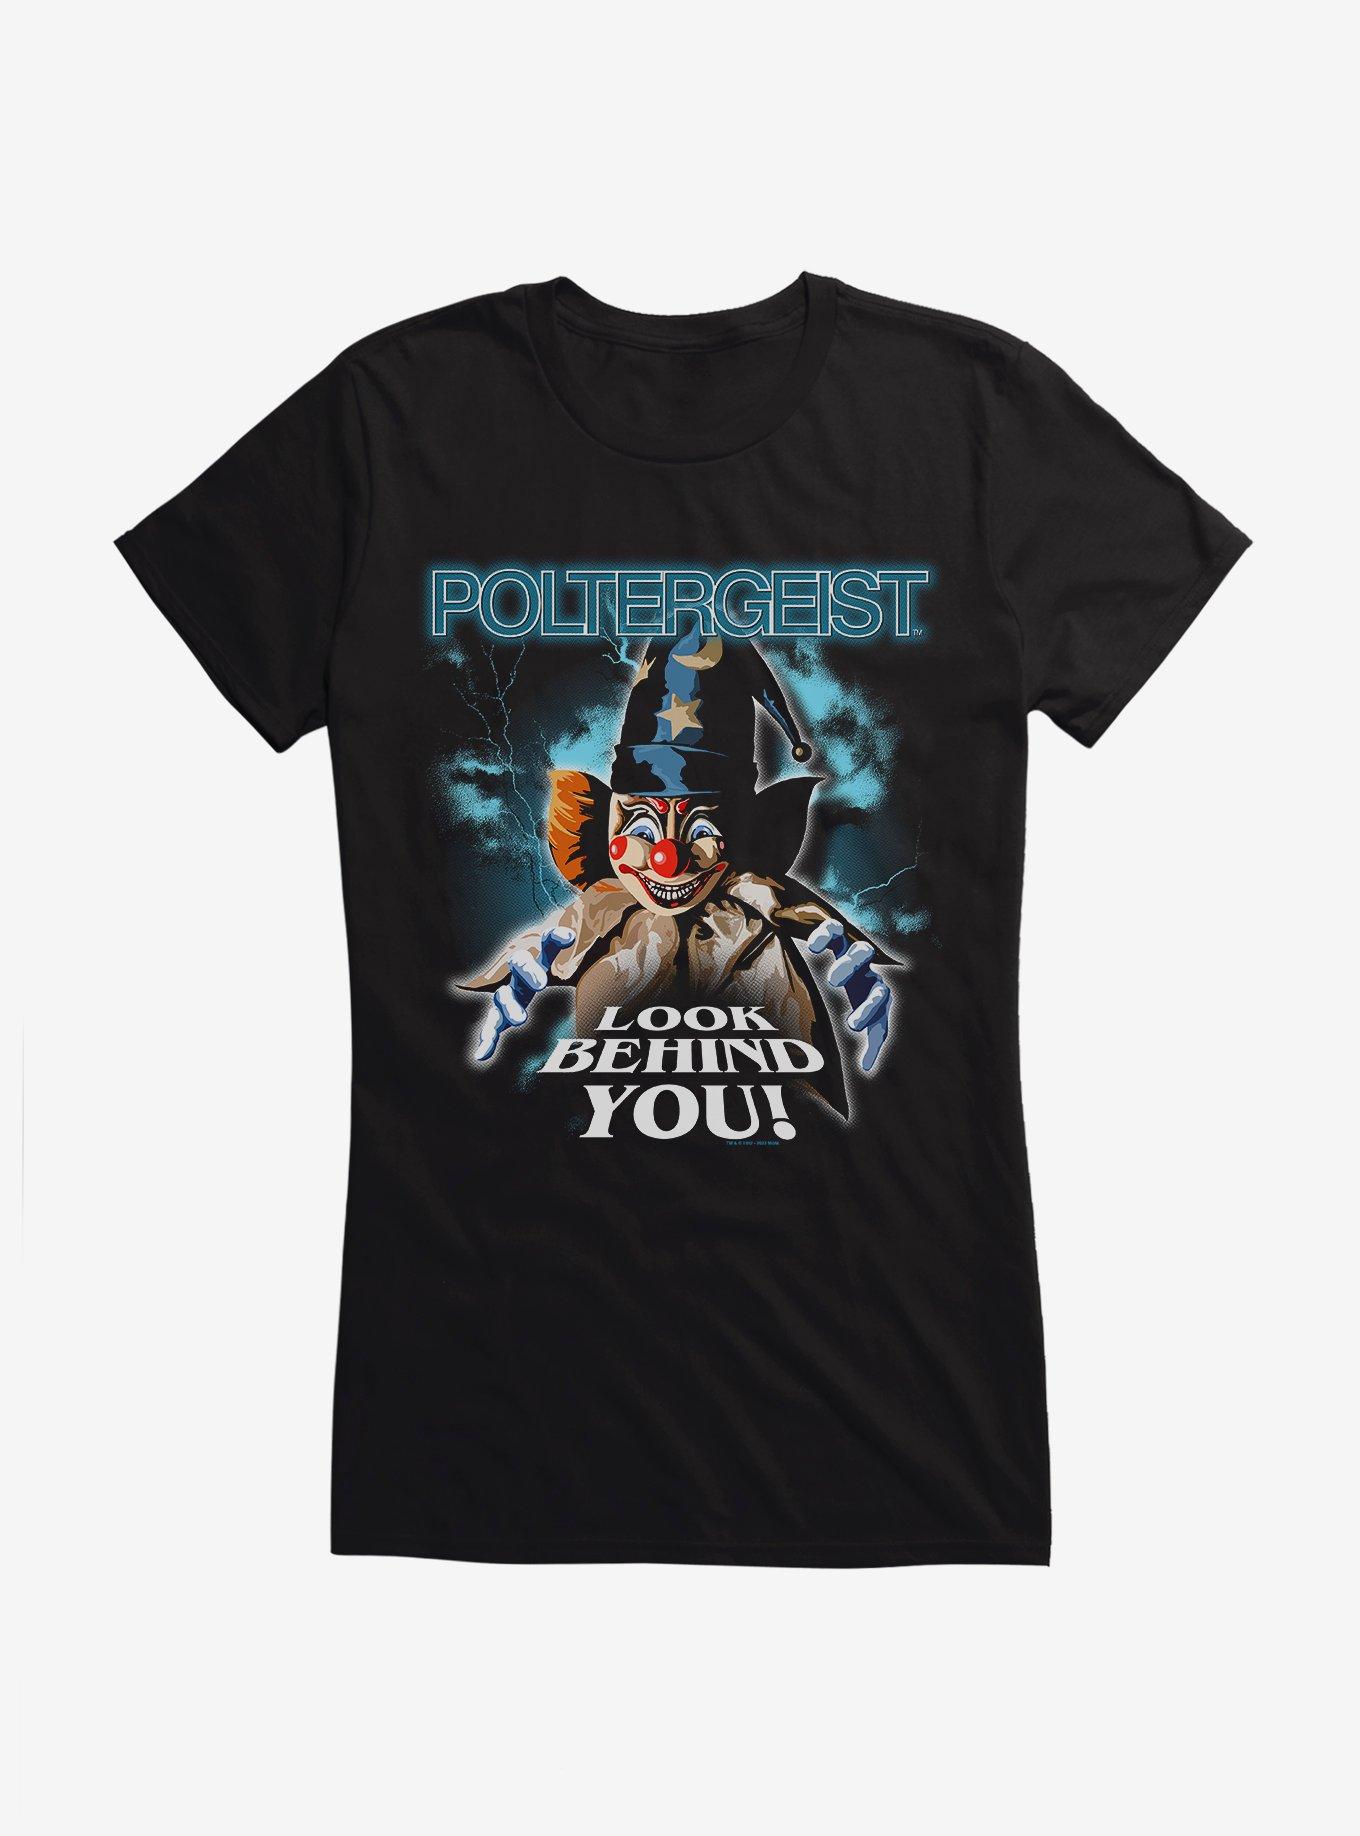 Poltergeist Look Behind You! Girls T-Shirt